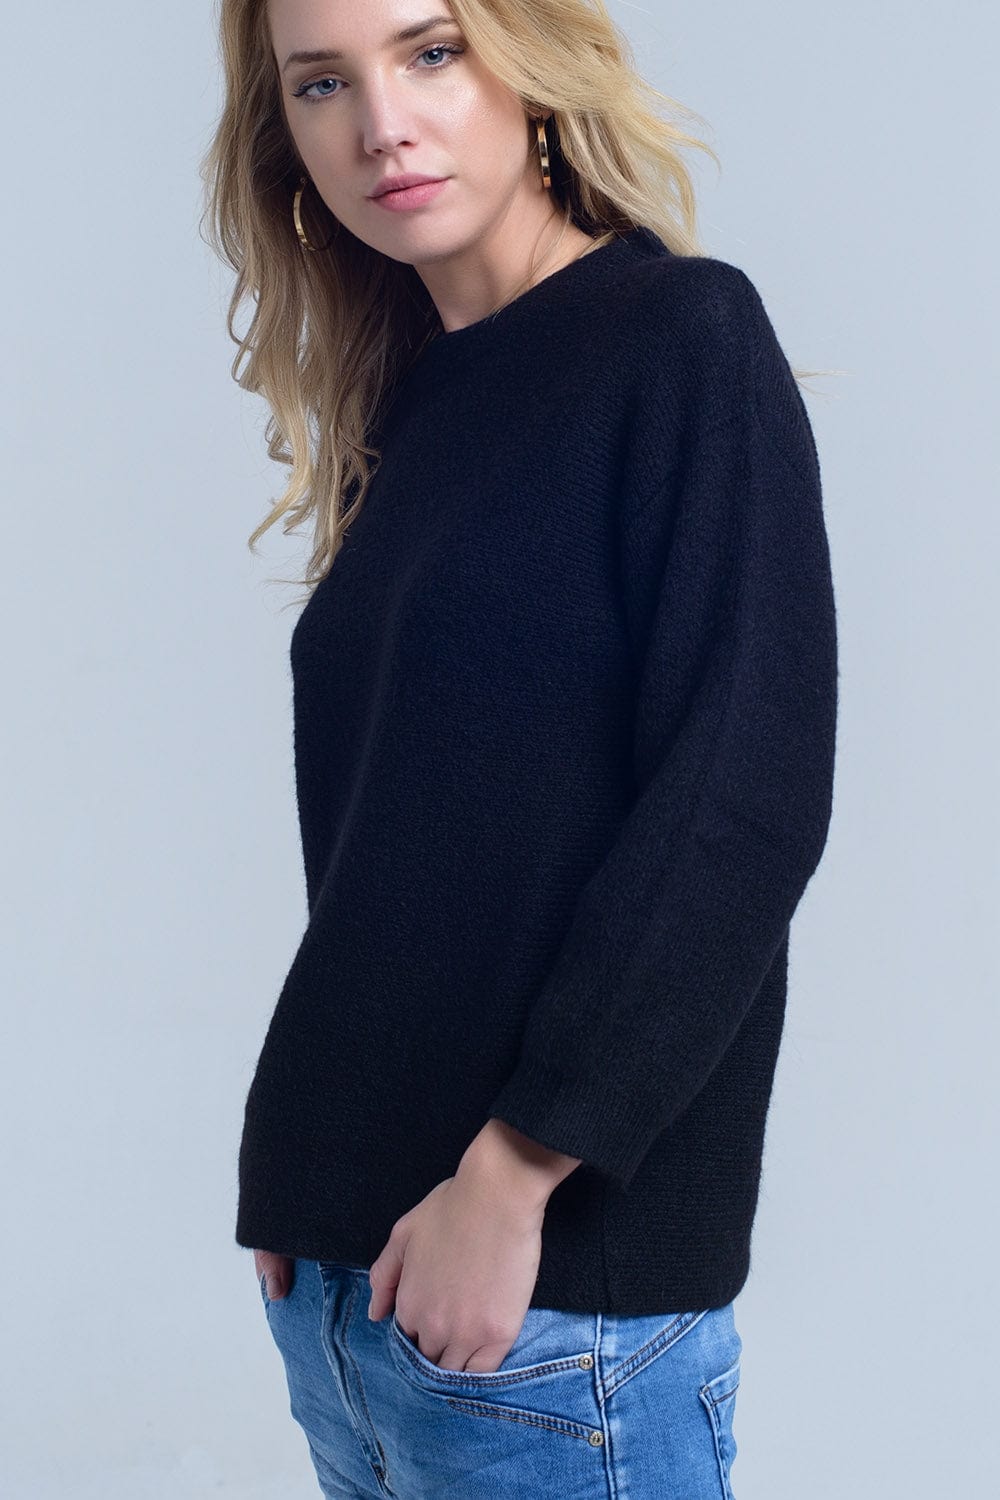 Q2 Women's Sweater Black knitted crew neck sweater